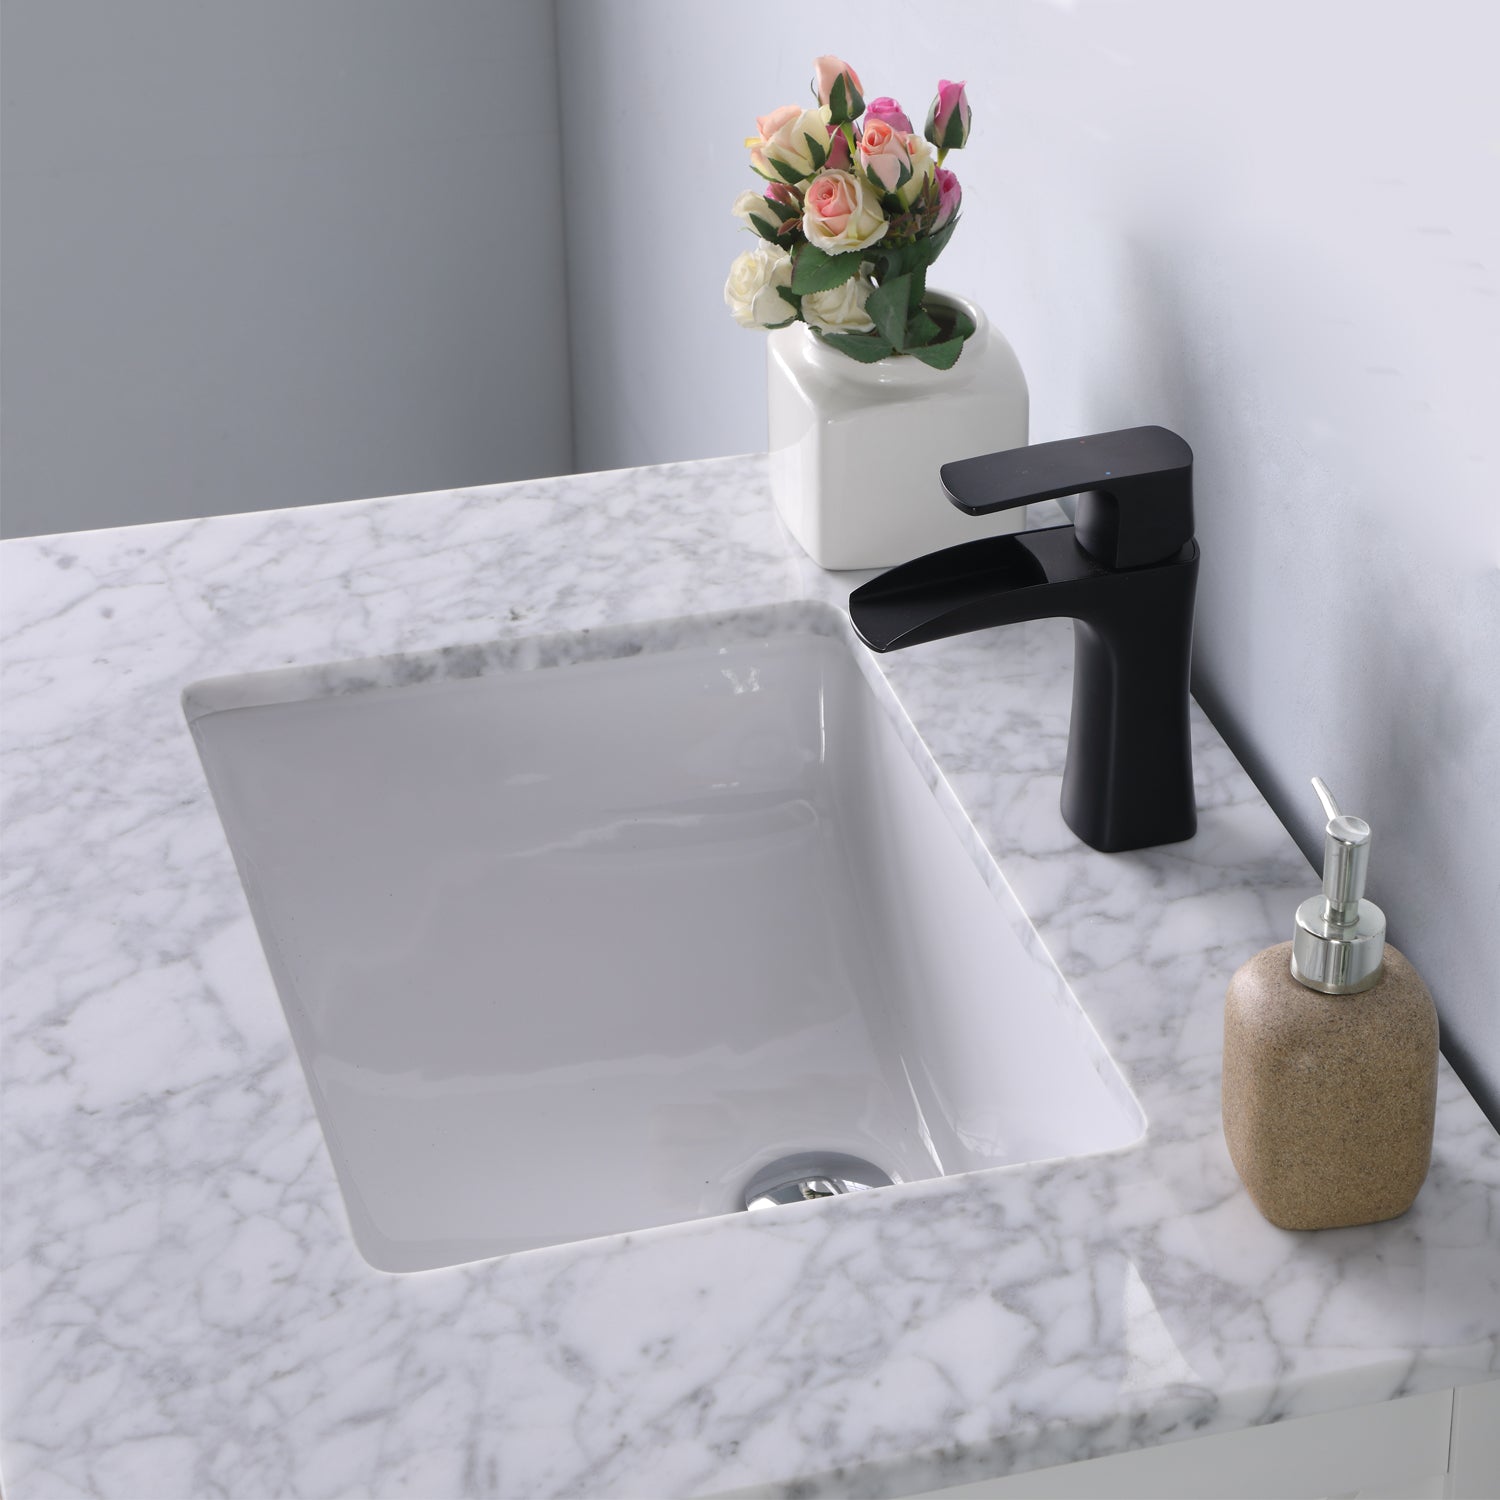 Maribella 30" Single Bathroom Vanity Set with Carrara White Marble Countertop